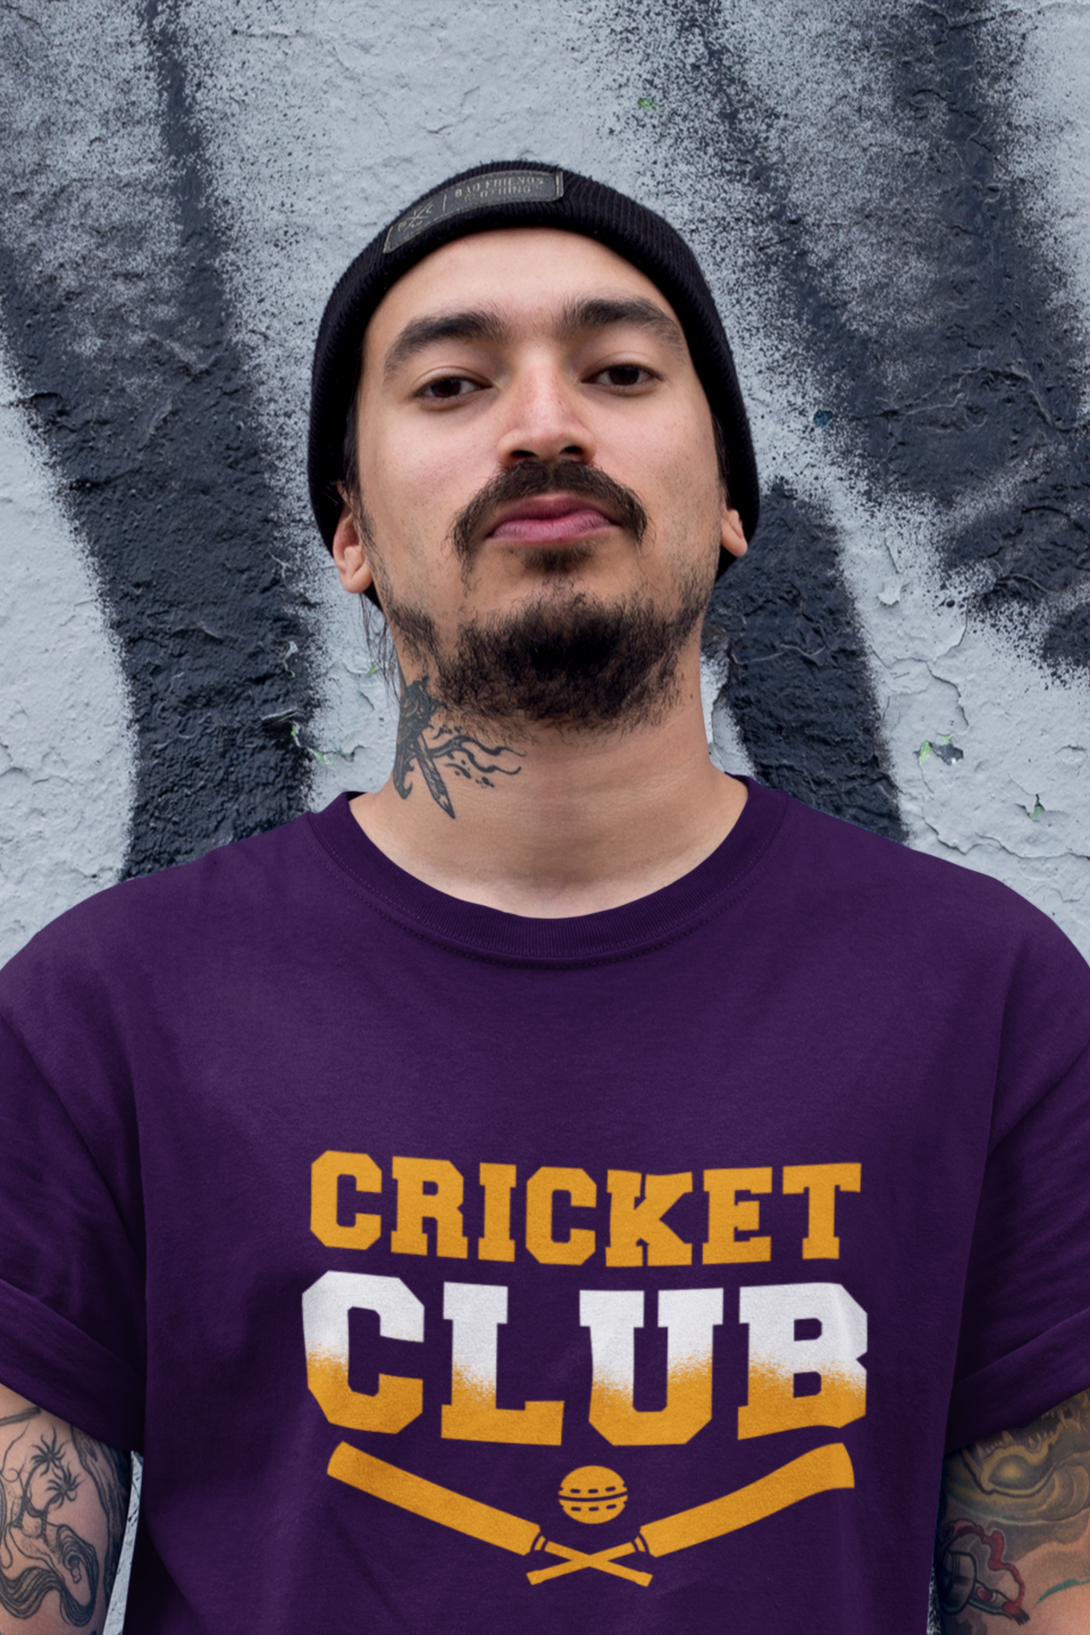 Cricket Club Printed T-Shirt For Men - WowWaves - 3